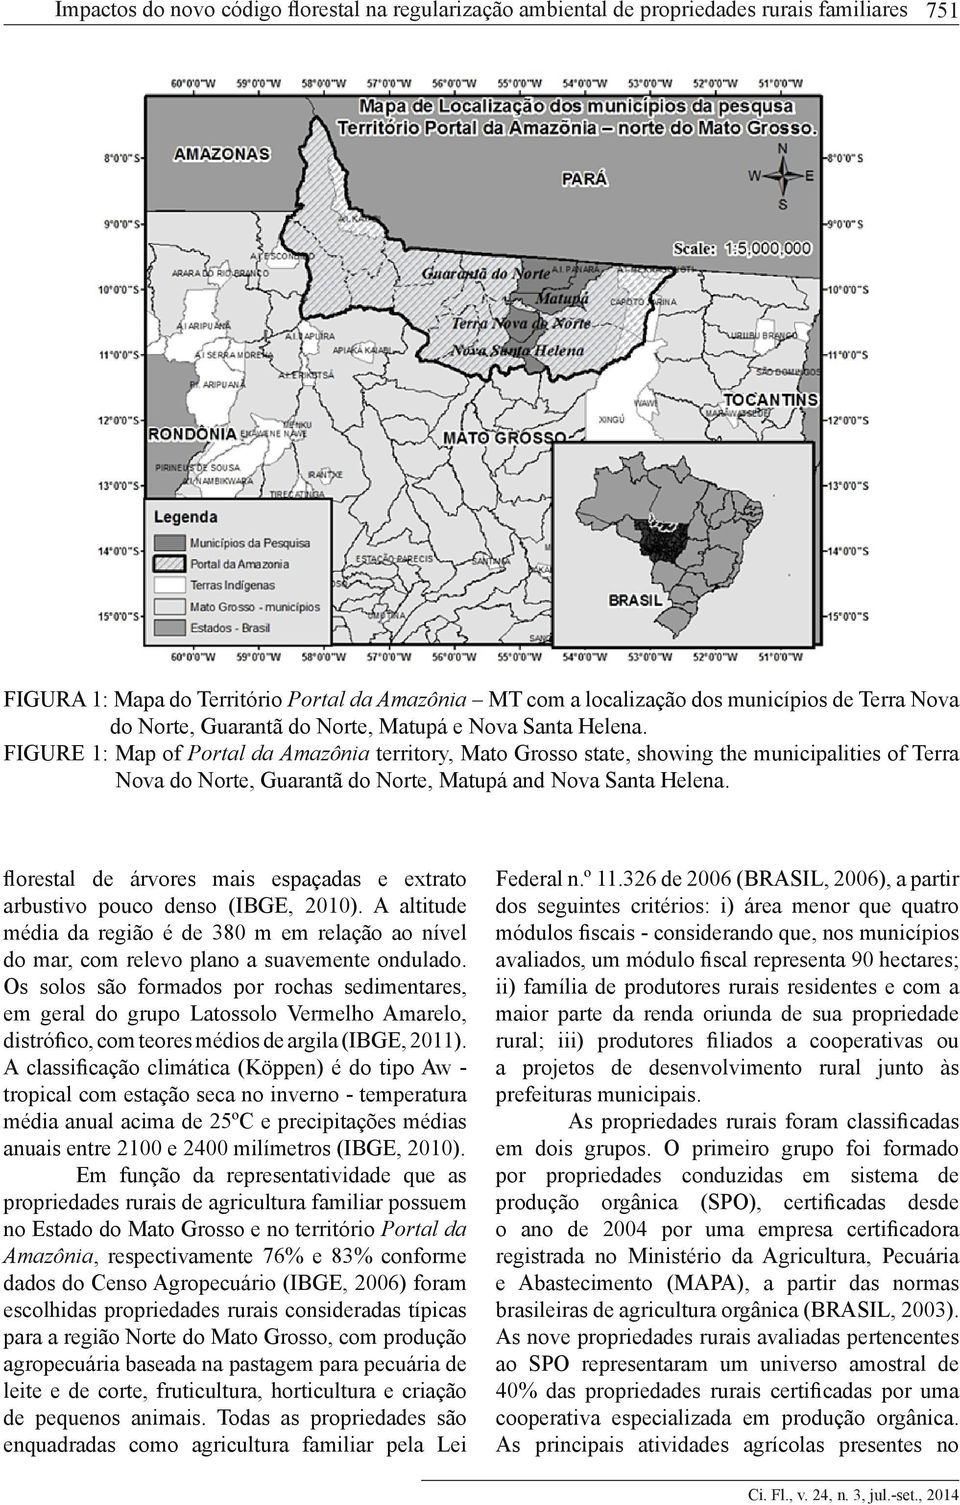 FIGURE 1: Map of Portal da Amazônia territory, Mato Grosso state, showing the municipalities of Terra Nova do Norte, Guarantã do Norte, Matupá and Nova Santa Helena.